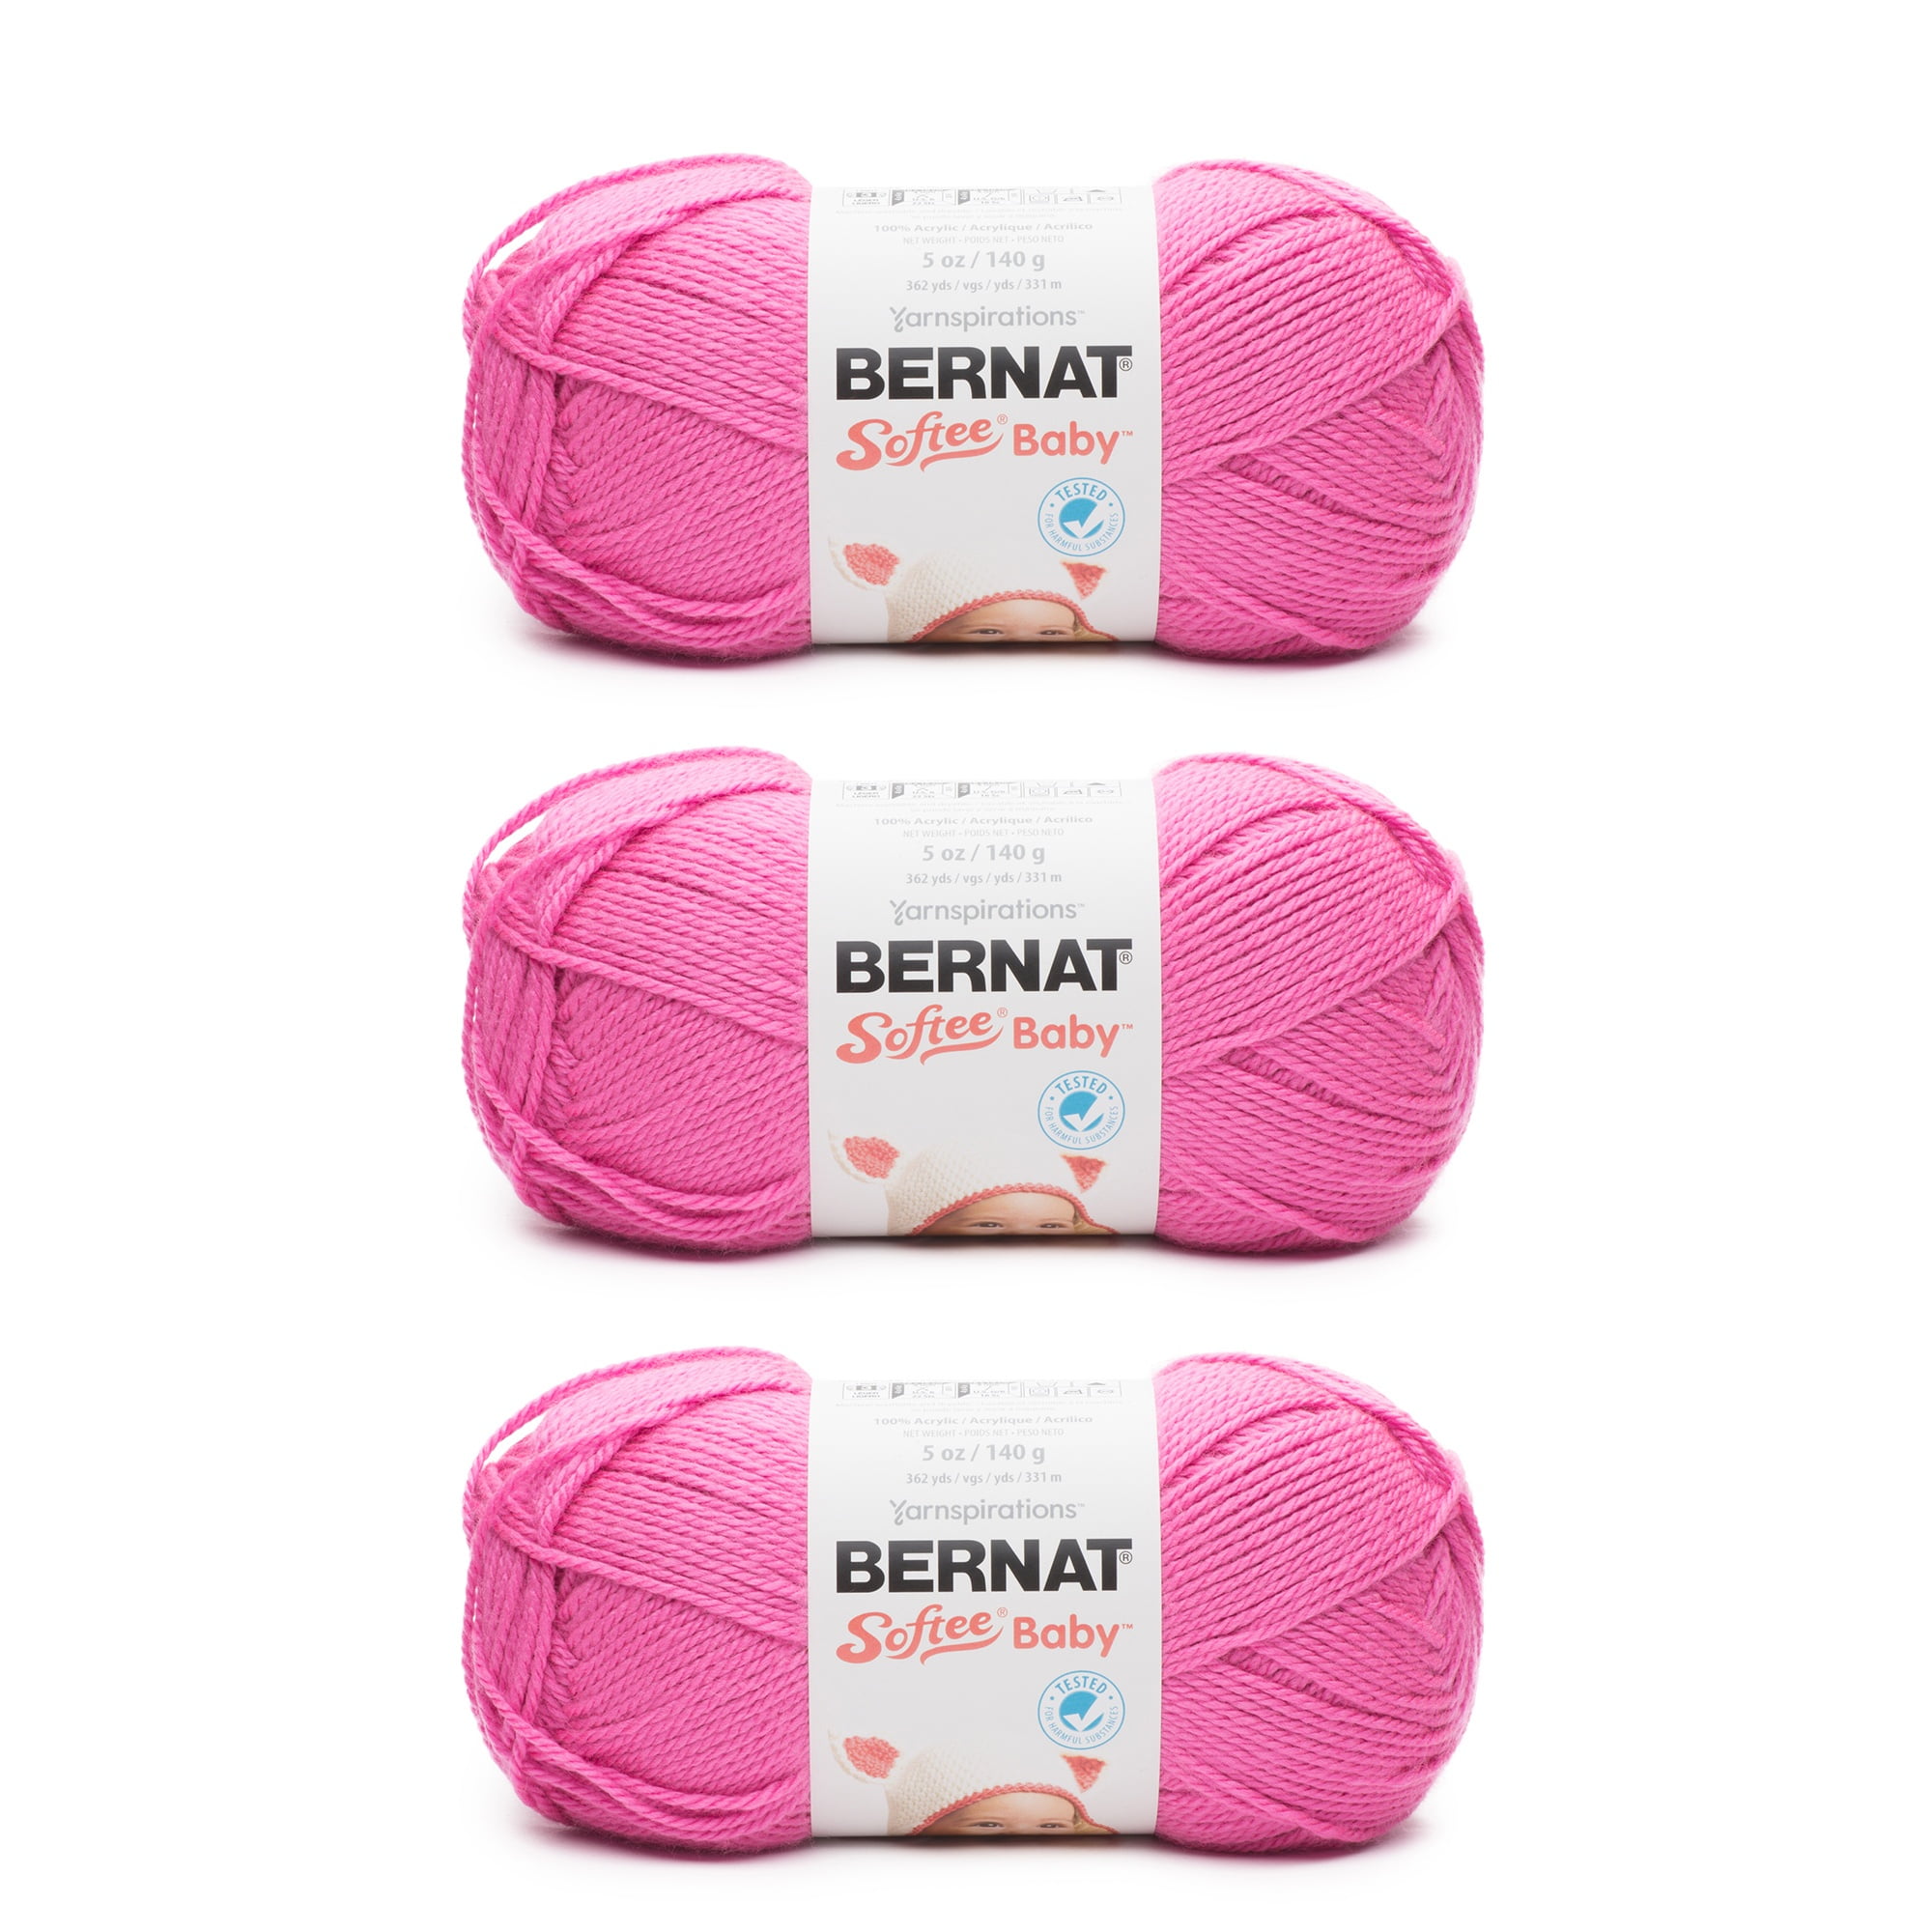 Bernat Softee Baby Yarn - 3 Pack of 141g/5oz - - 3 DK - 362 Yards - Knitting/Crochet - Walmart.com